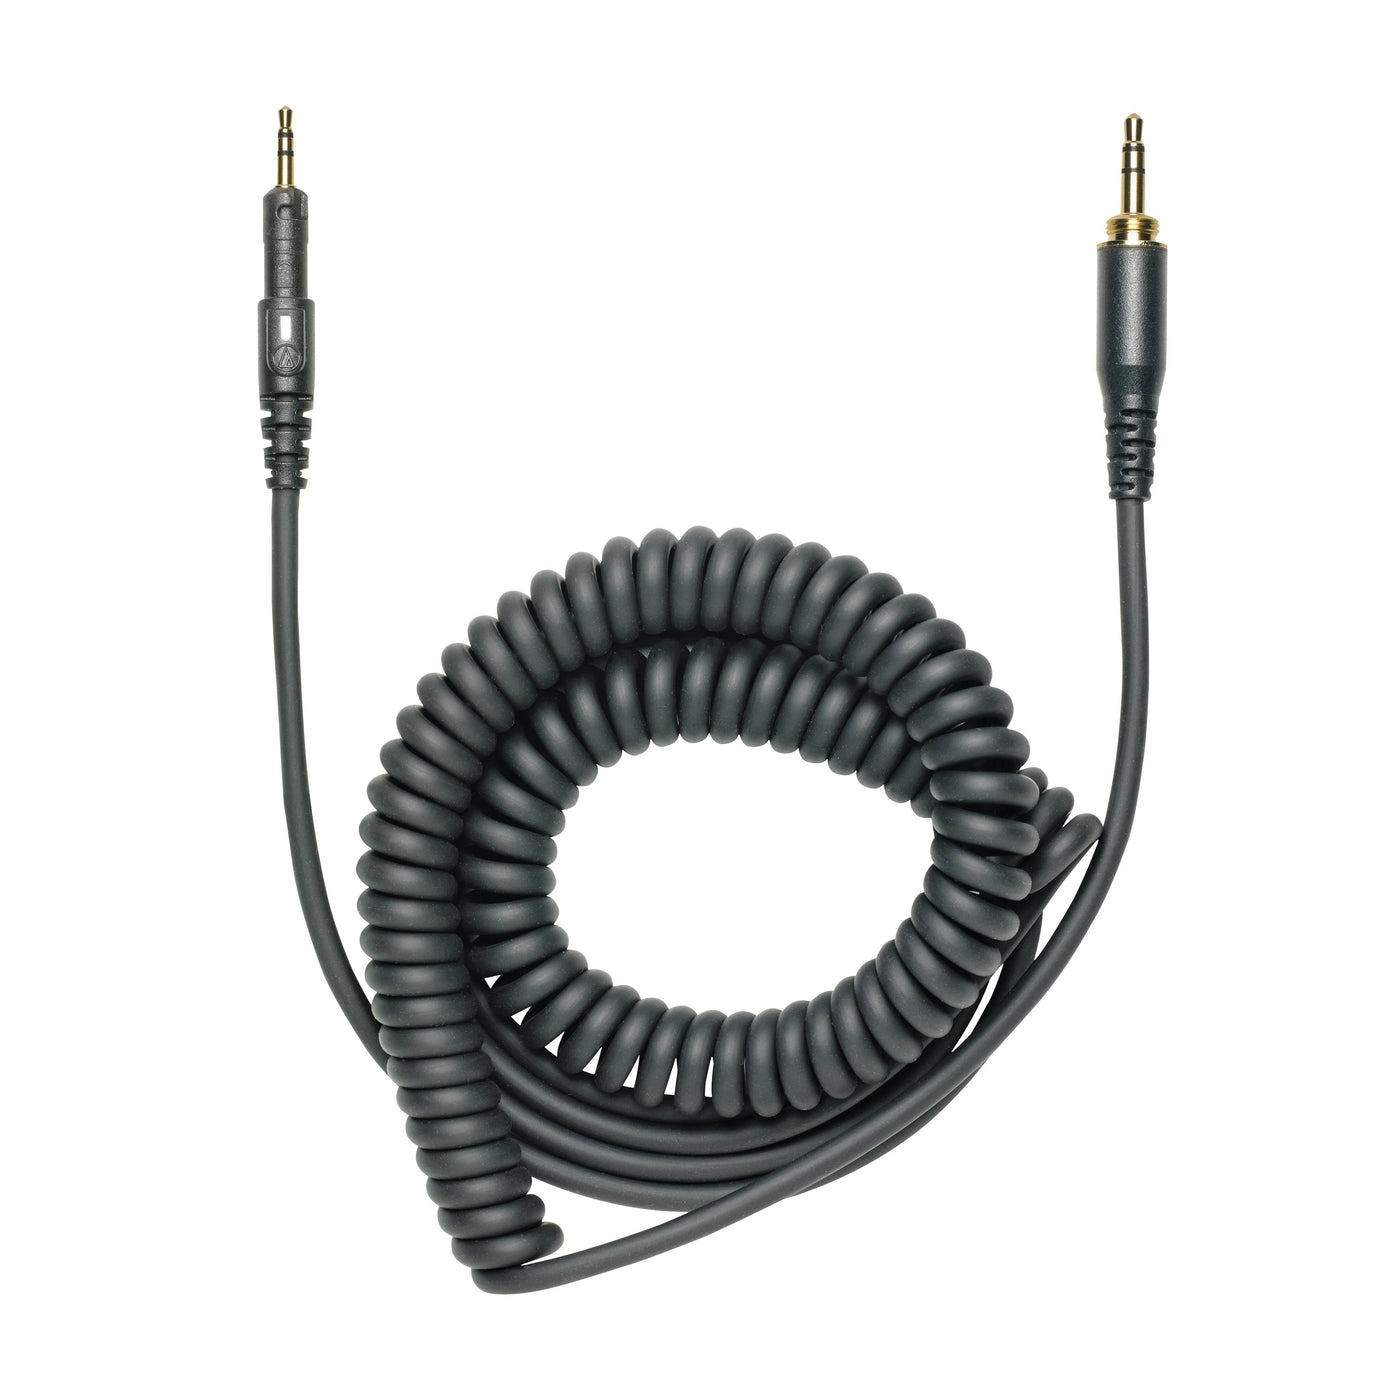 Audio-Technica ATH-M50xDS Professional Monitor Headphones